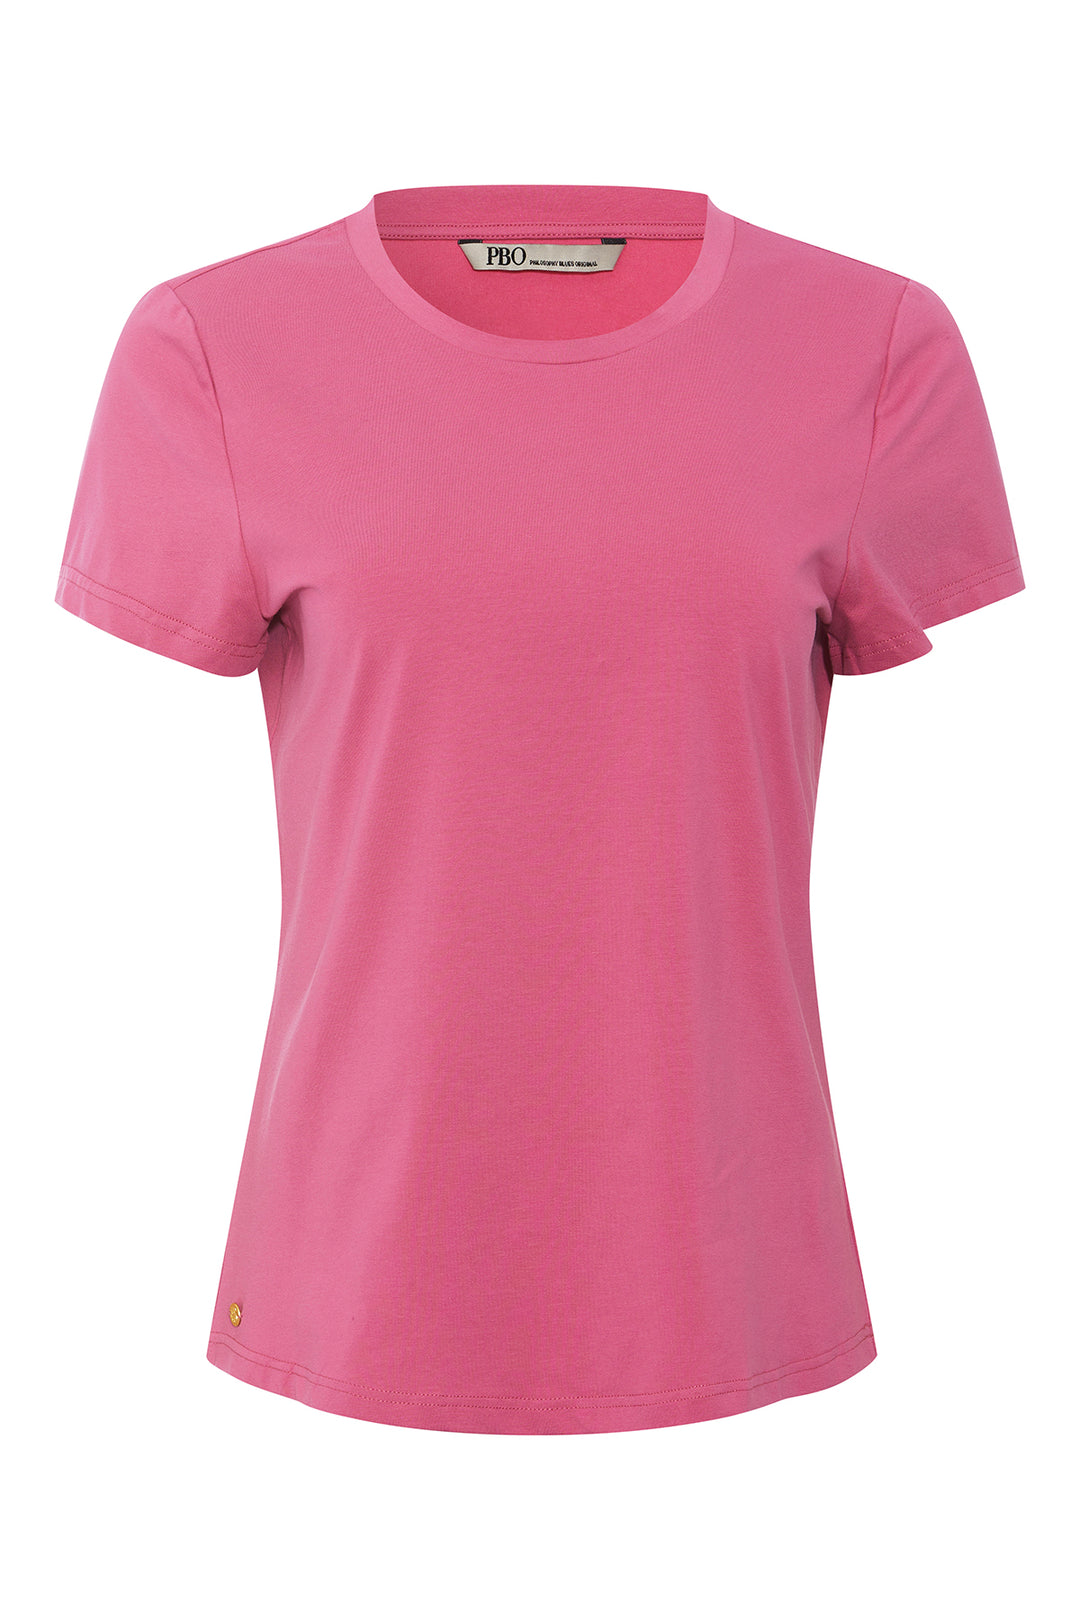 PBO Domos T-shirt T-SHIRTS 853 Dry rose